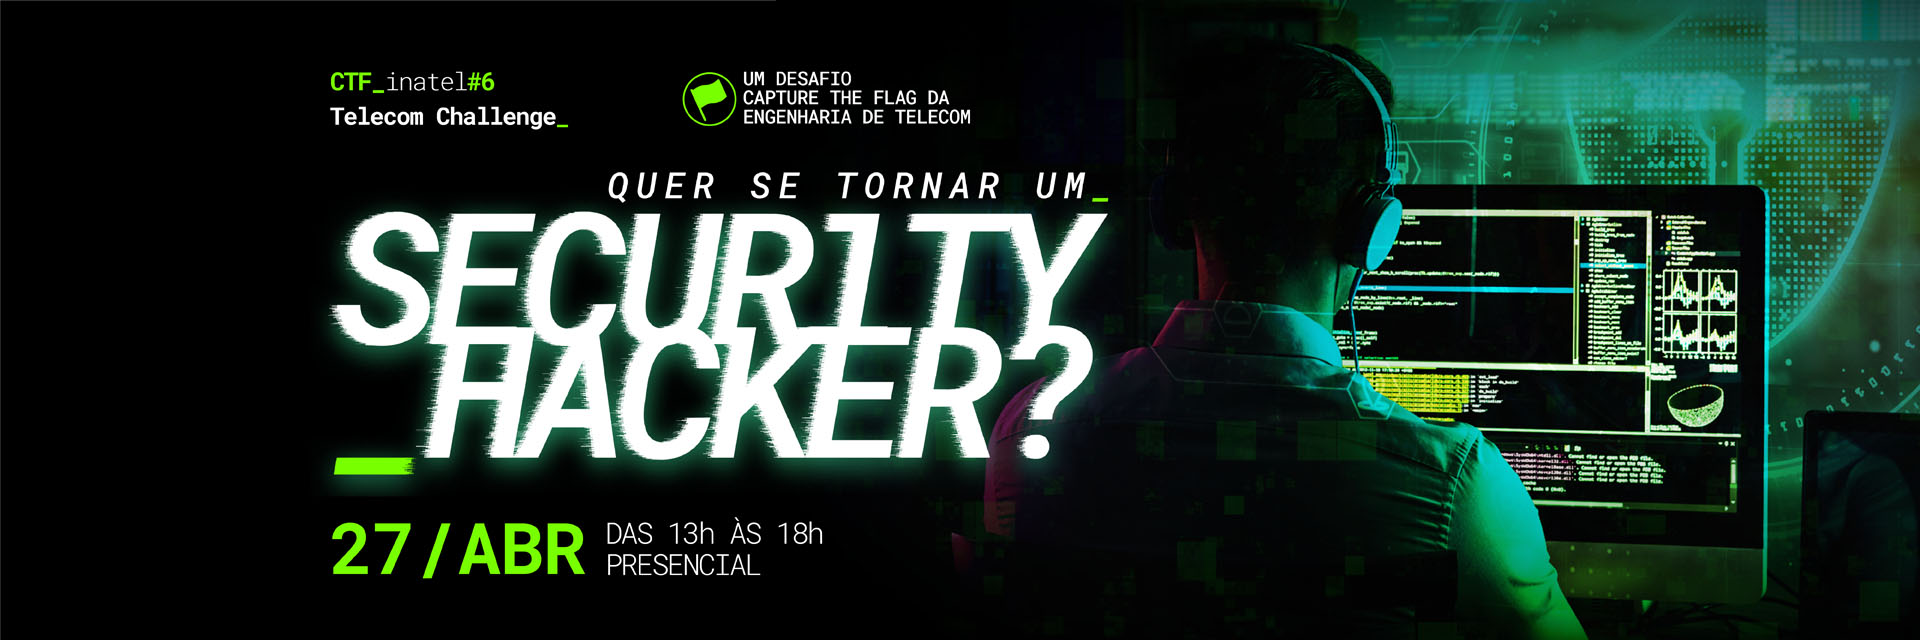 CRF_inatel#3 - Telecom Challenge - Security Hacker